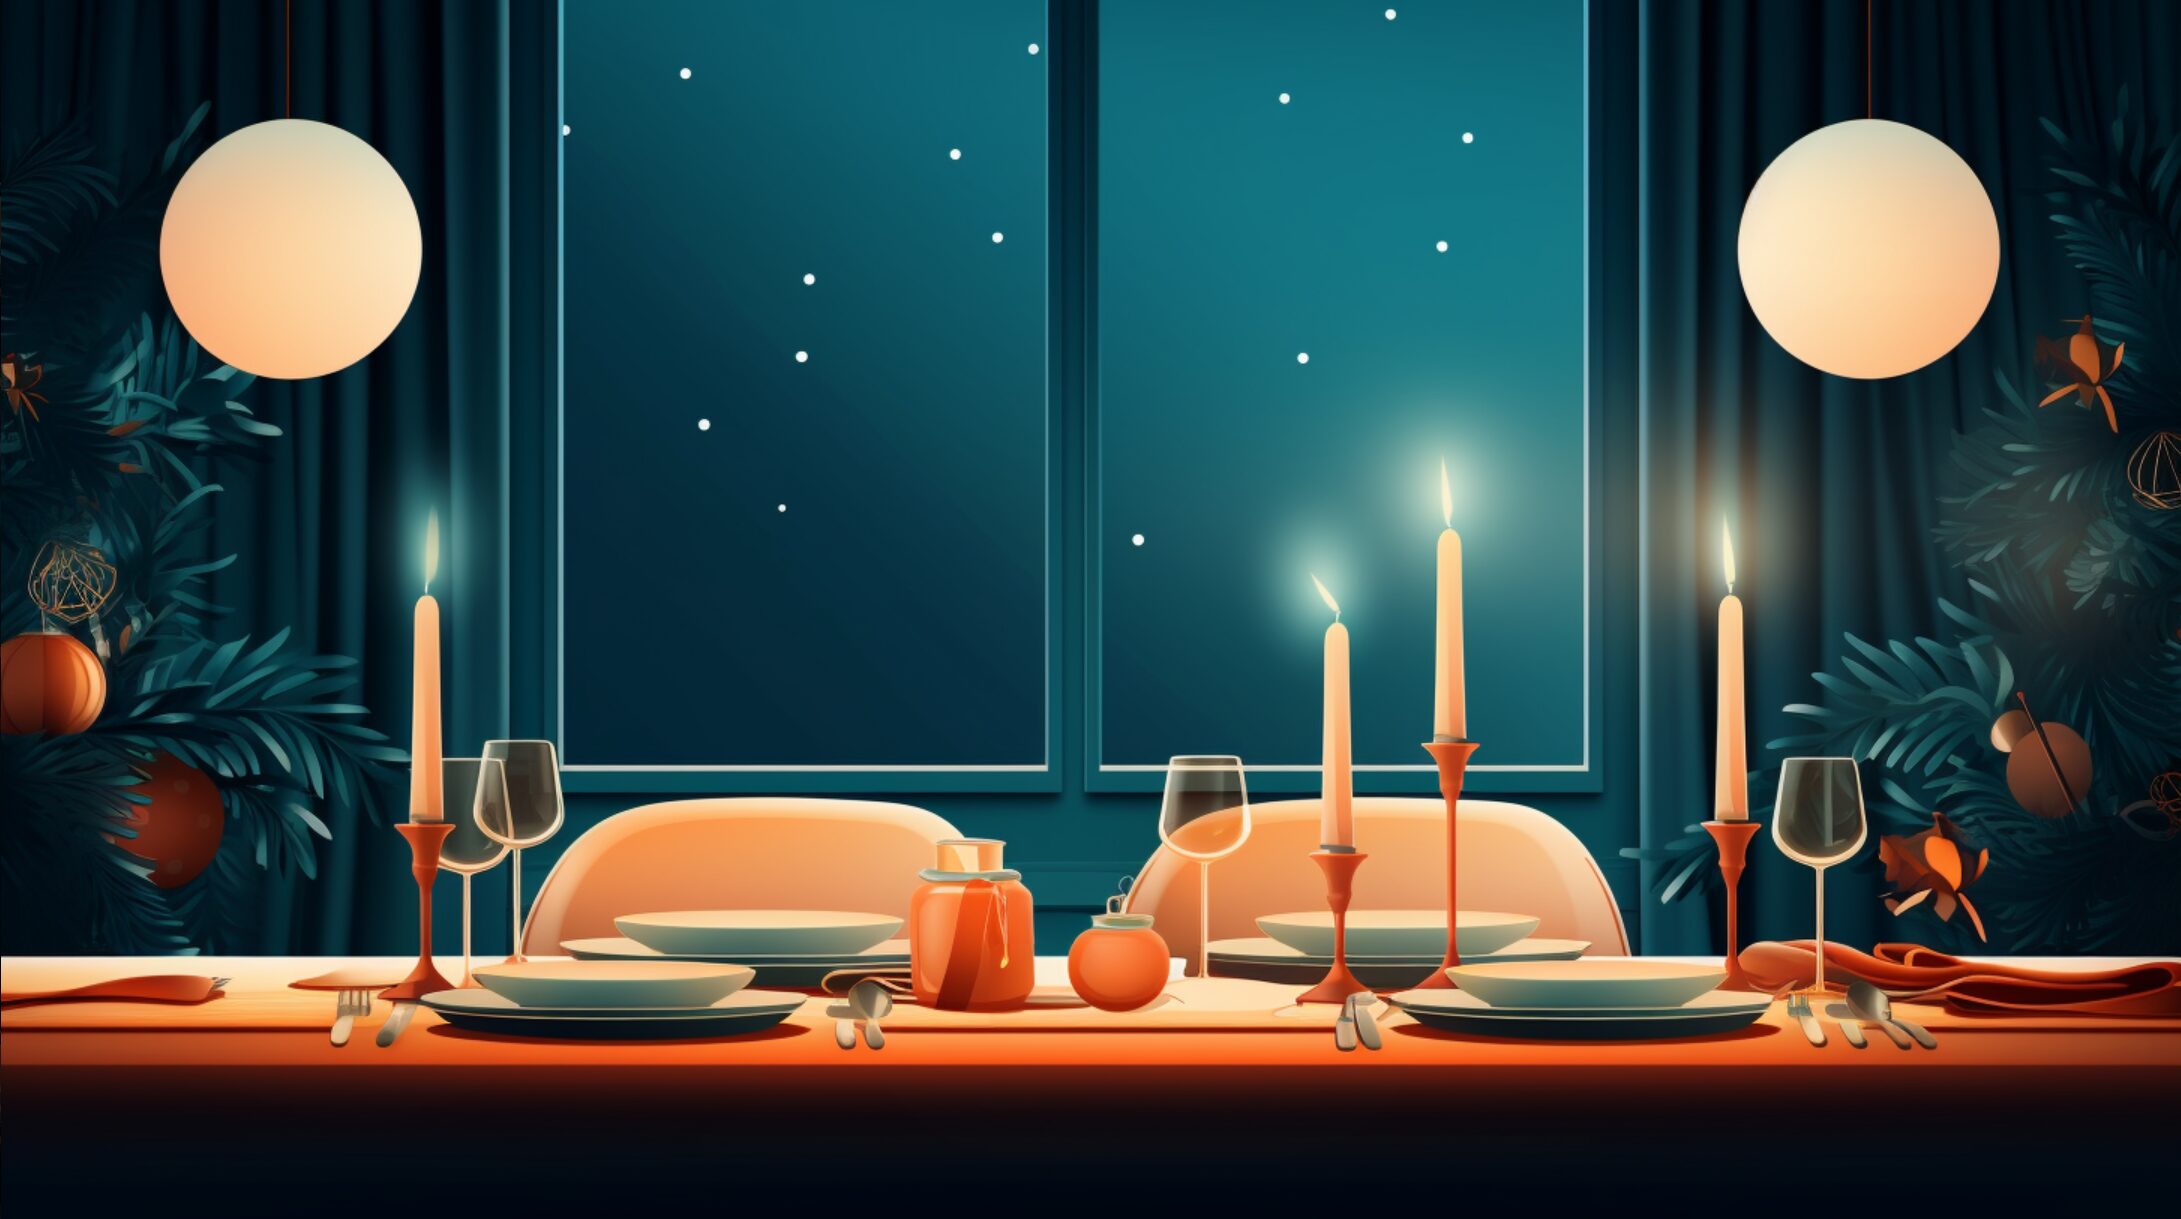 Christmas dinner on table